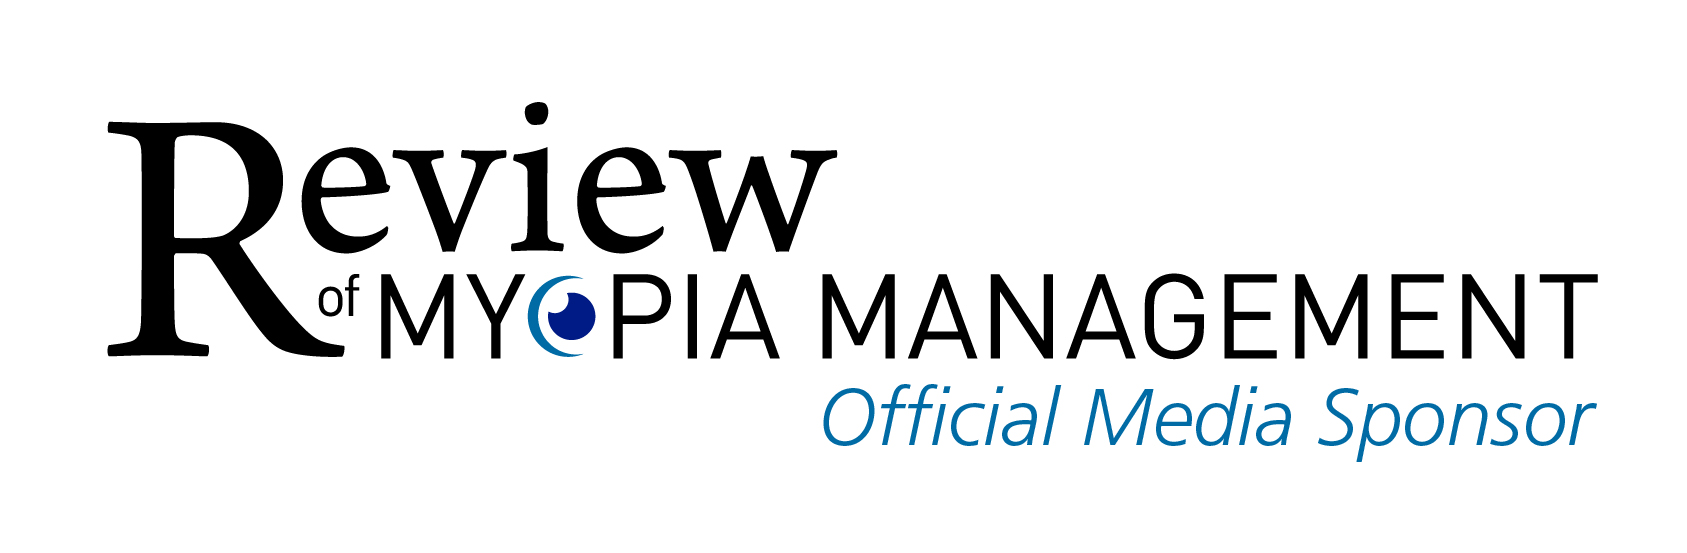 Review of Myopia Management_OfficialMediaSponsor_0222-01